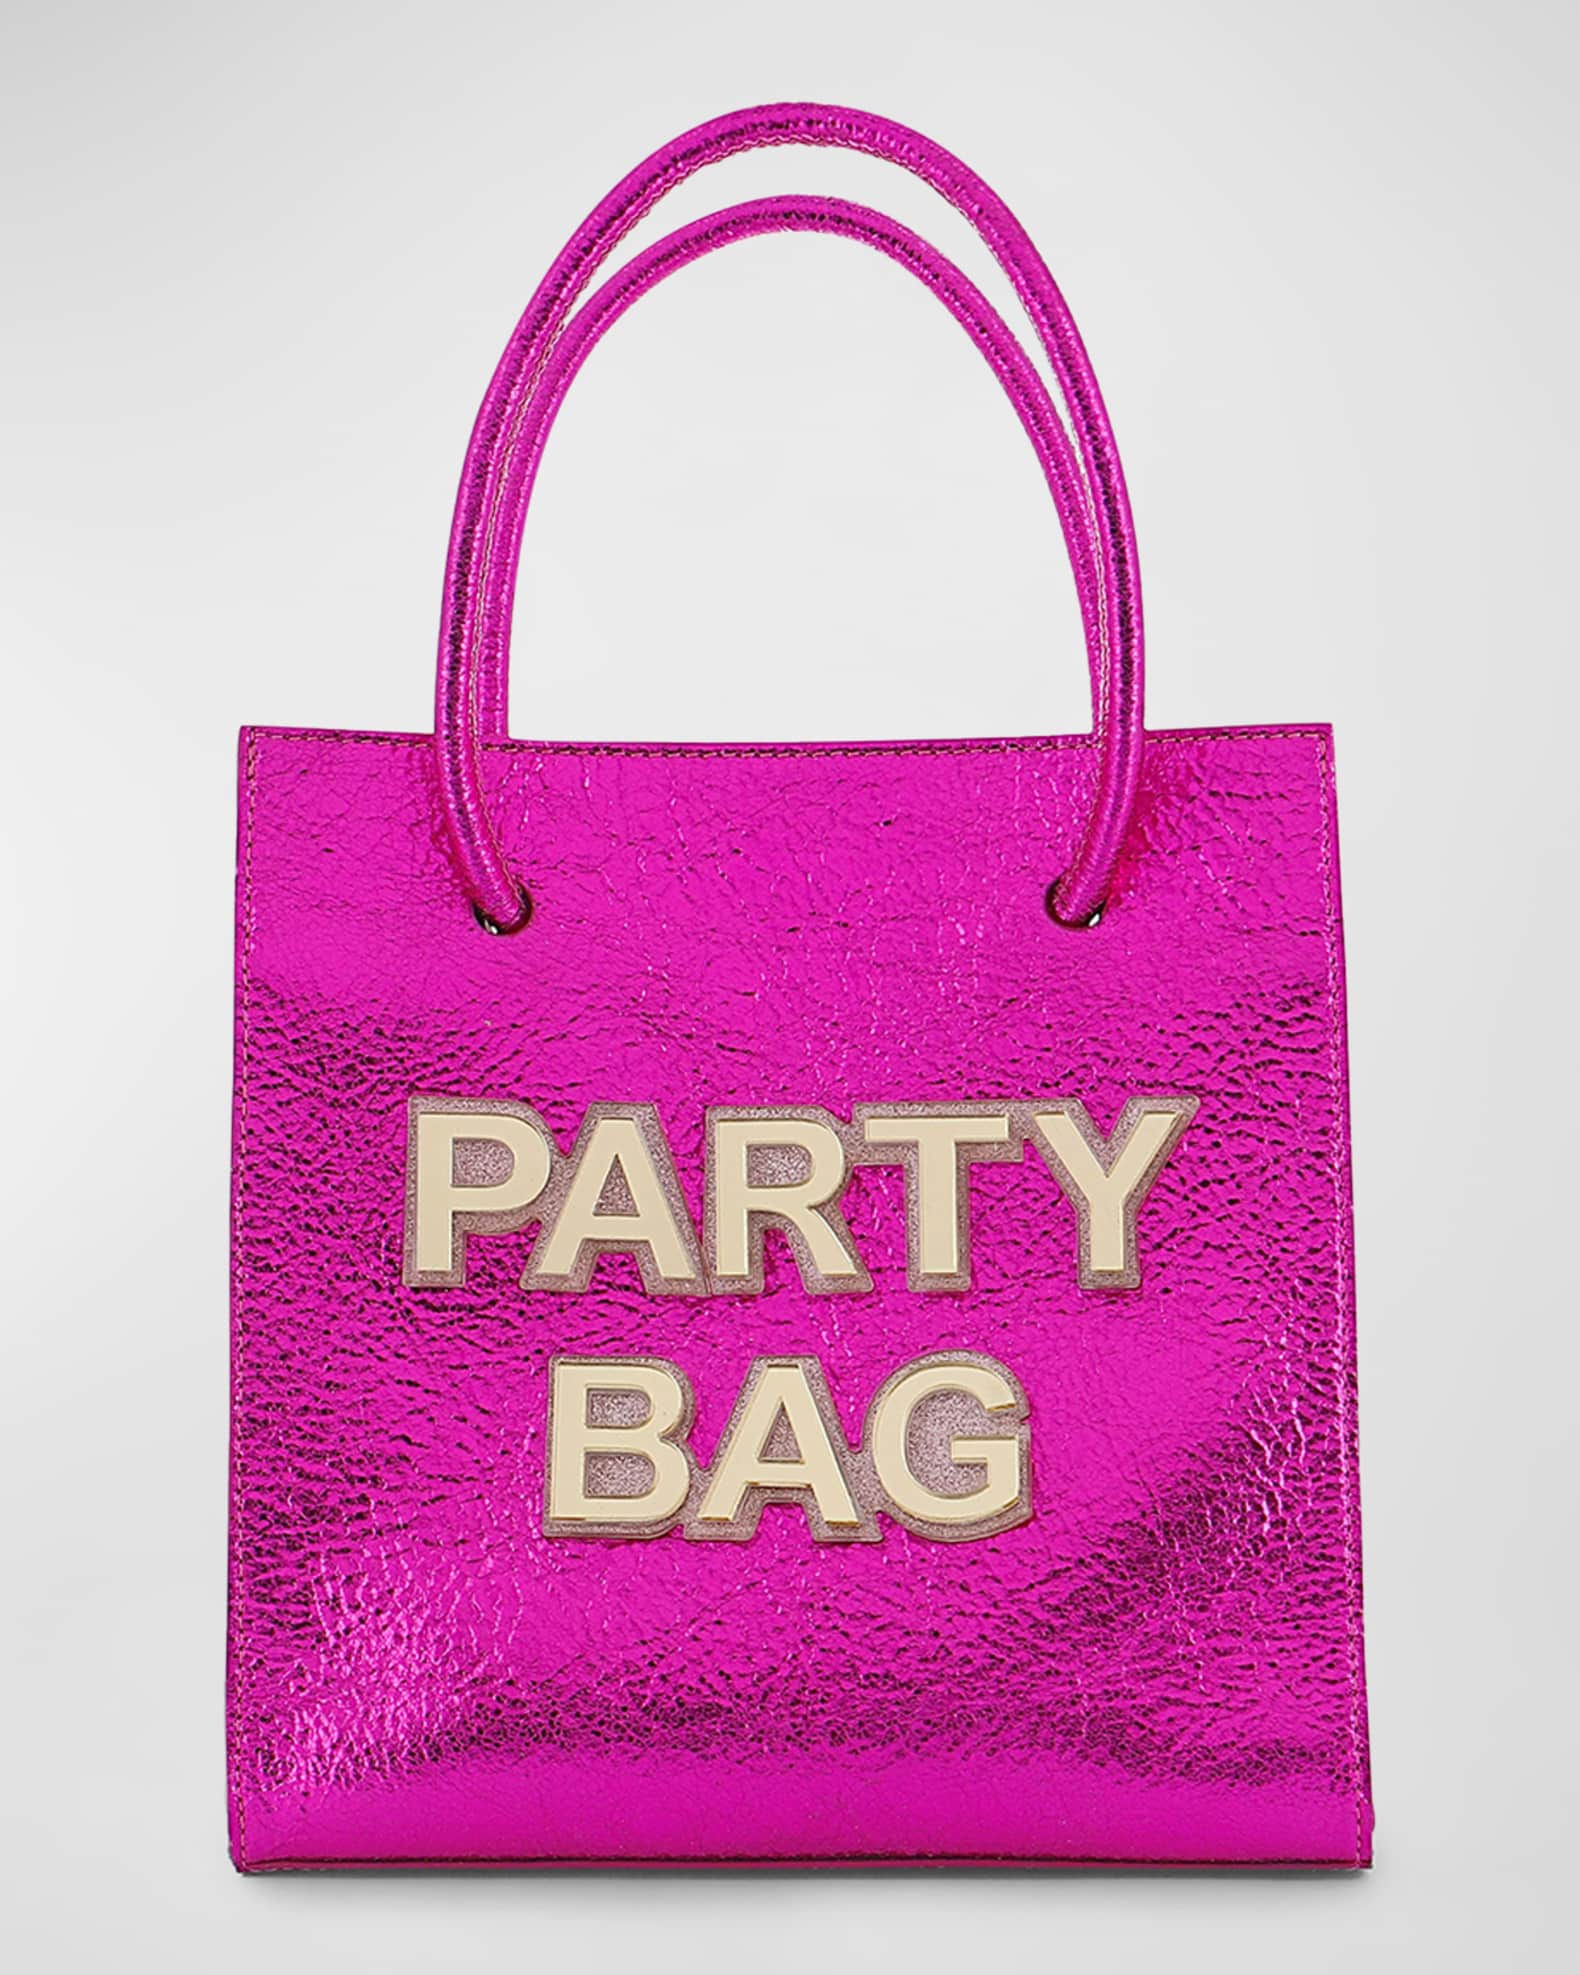 Shop Bloomingdale's Women's Bags